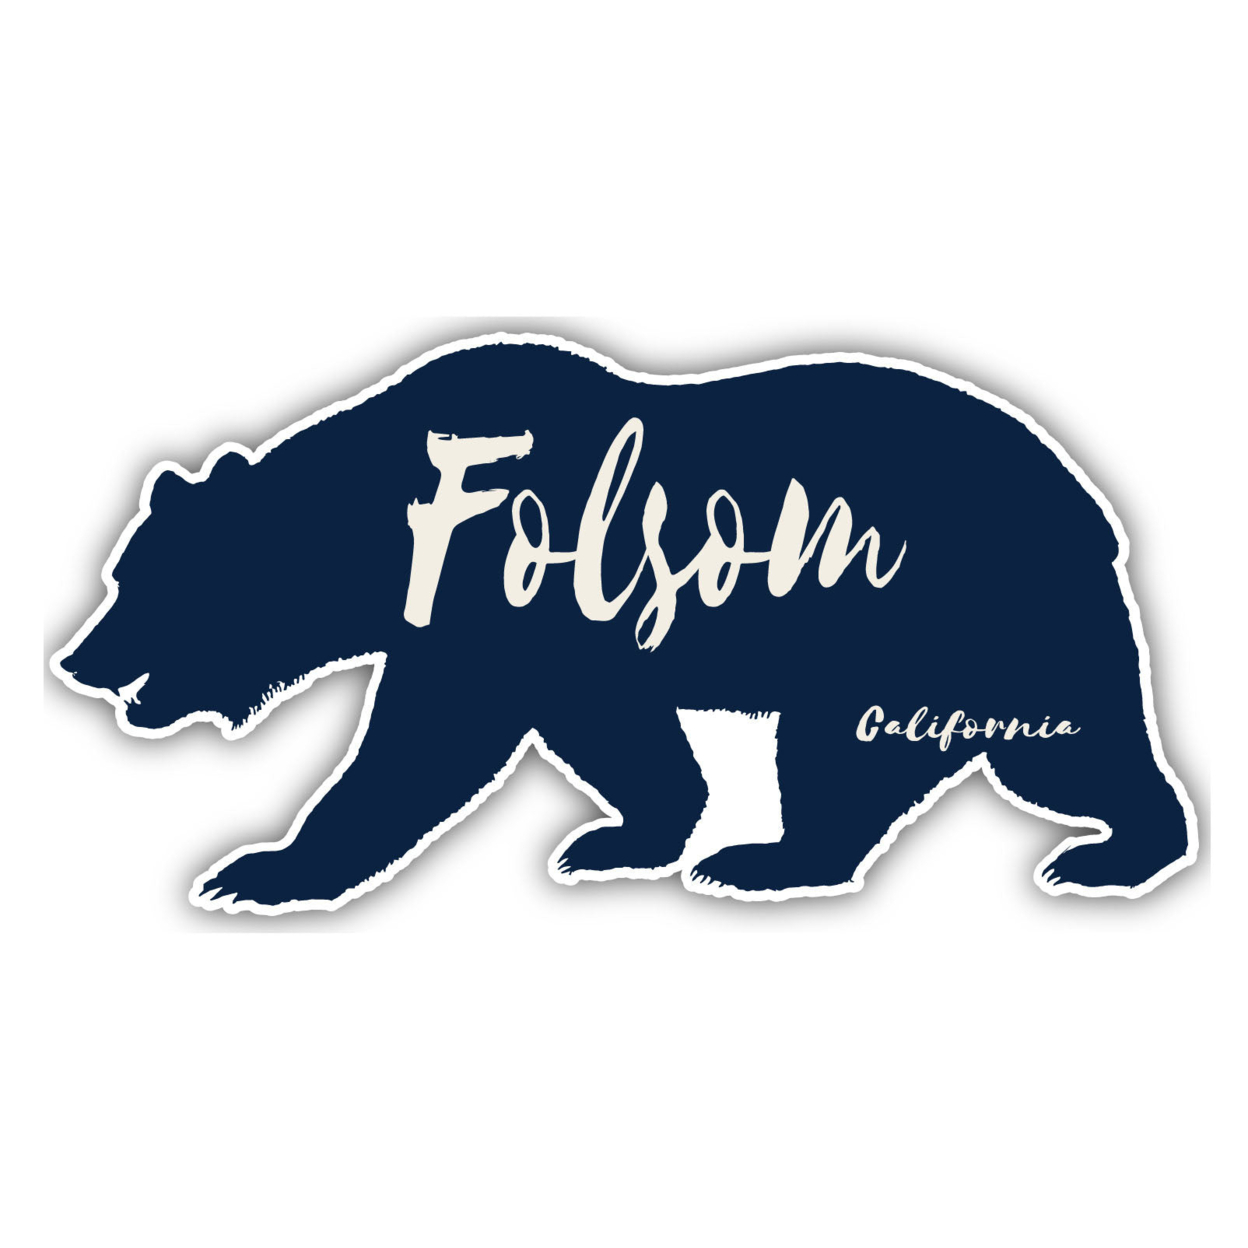 Folsom California Souvenir Decorative Stickers (Choose Theme And Size) - Single Unit, 12-Inch, Tent